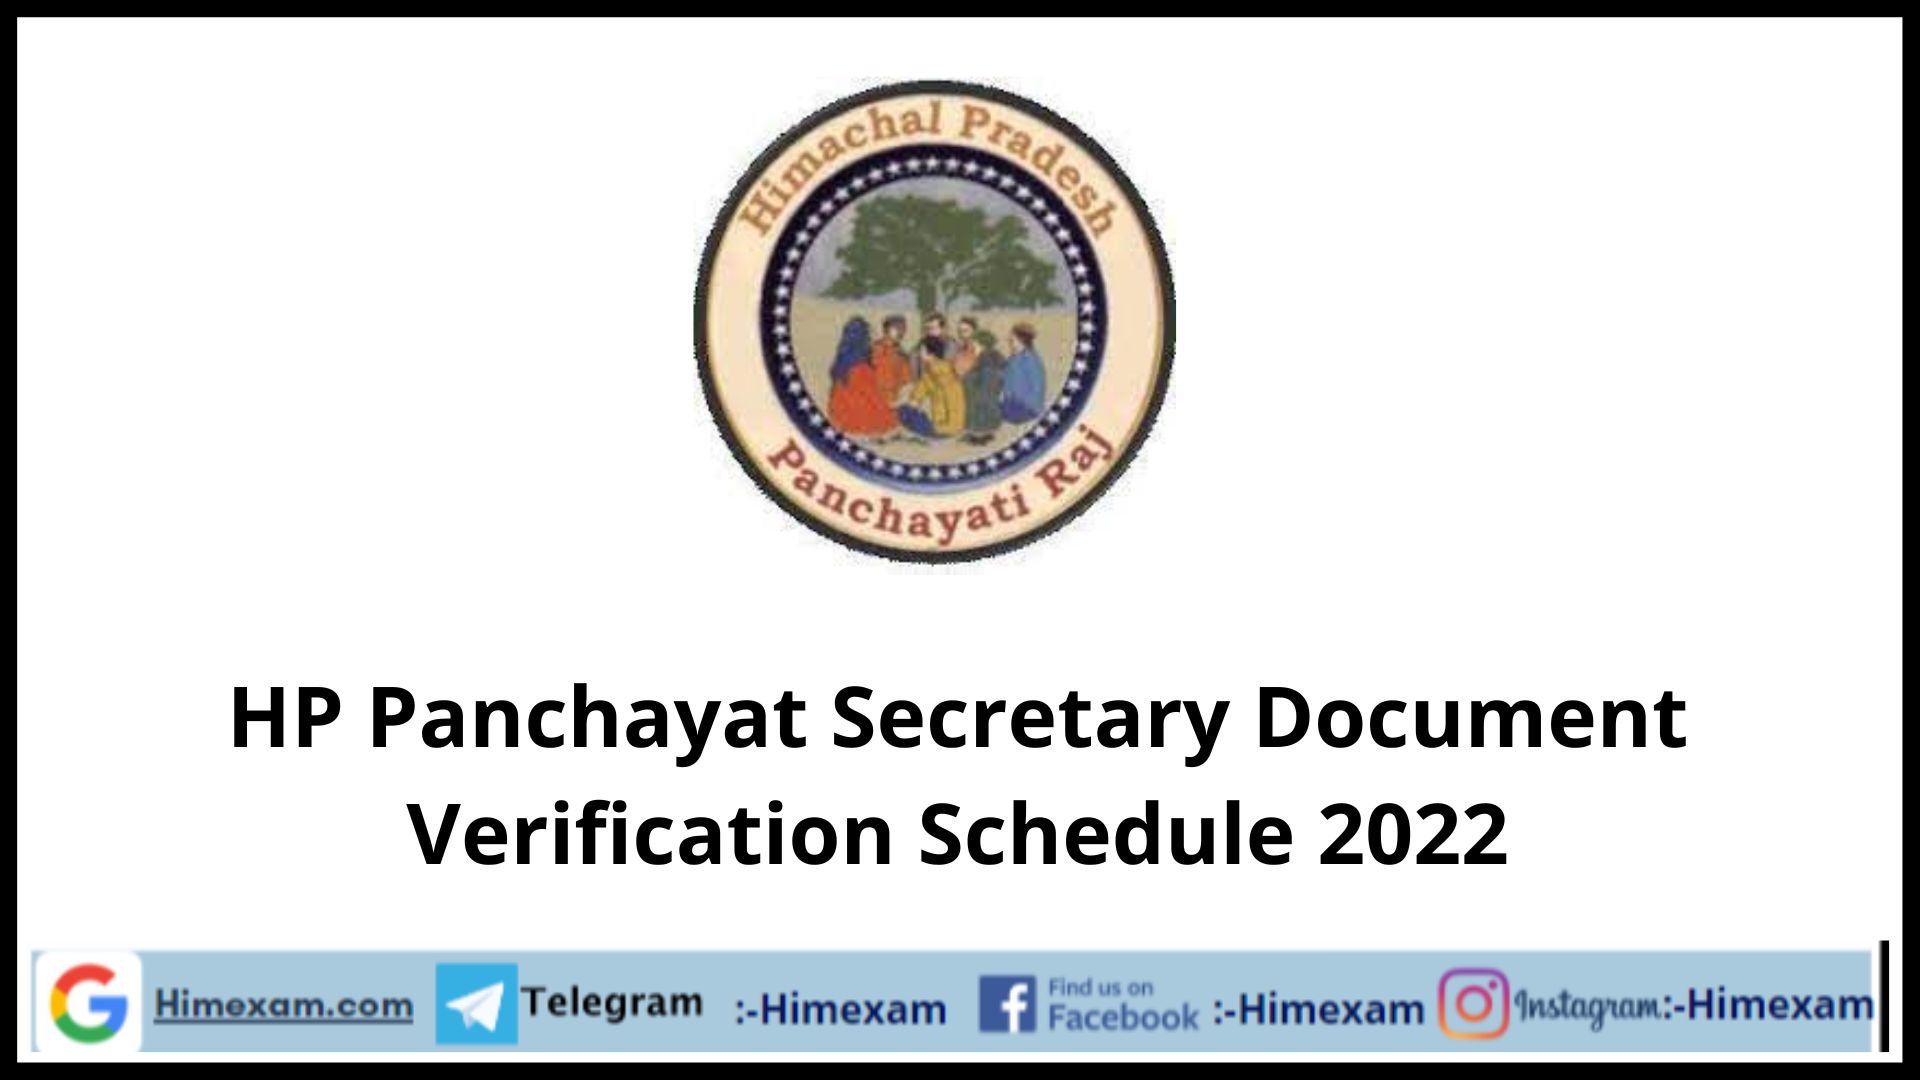 HP Panchayat Secretary Document Verification Schedule 2022